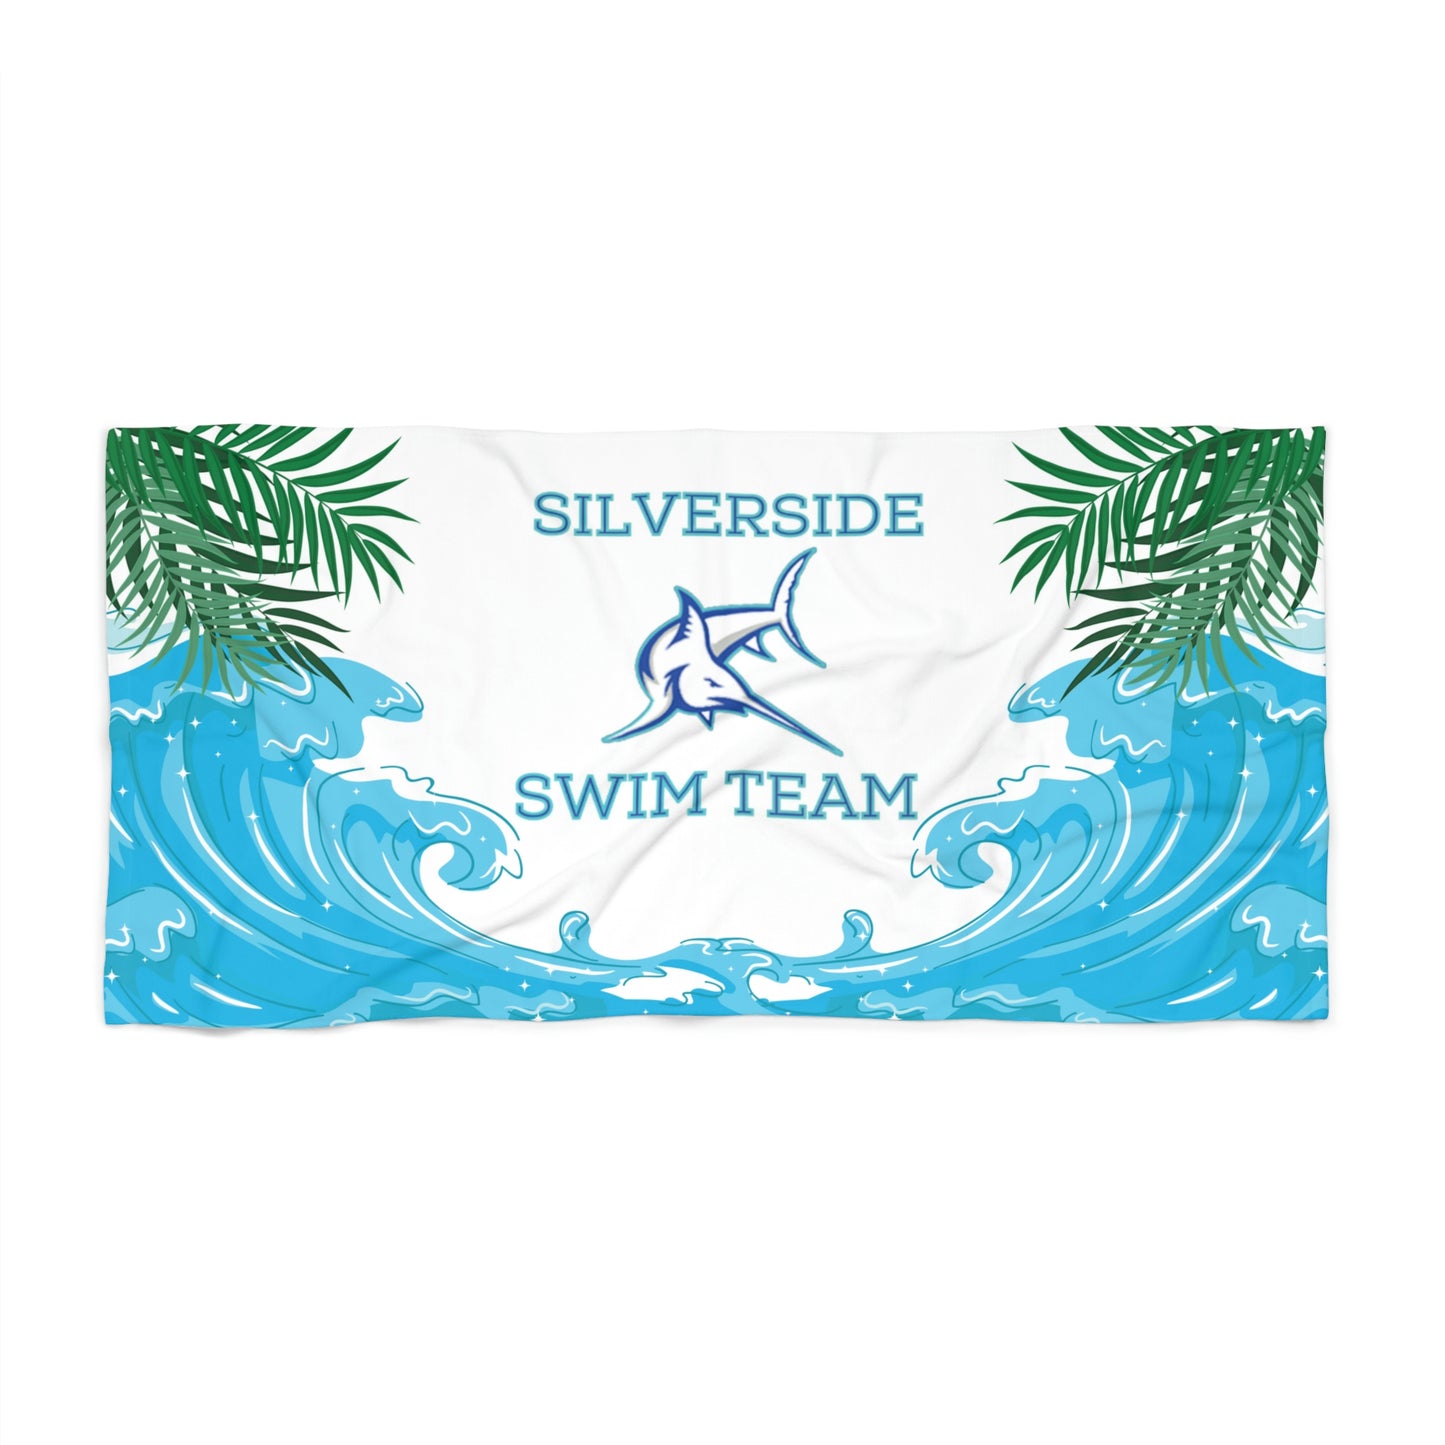 Silverside Swim Team Pool Towel